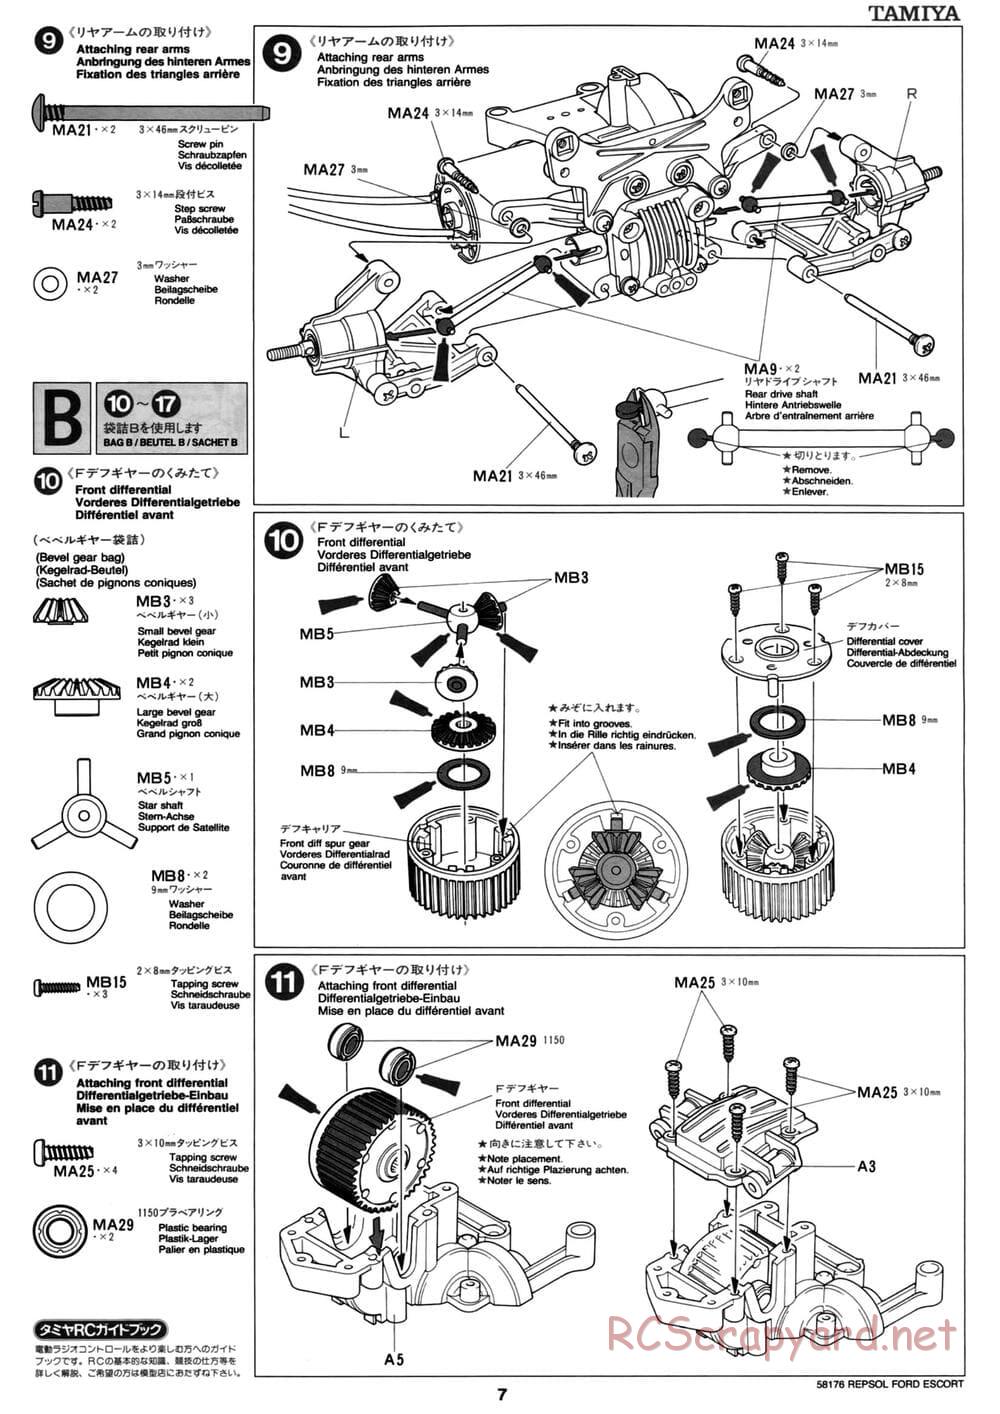 Tamiya - Repsol Ford Escort RS Cosworth - TA-02 Chassis - Manual - Page 7